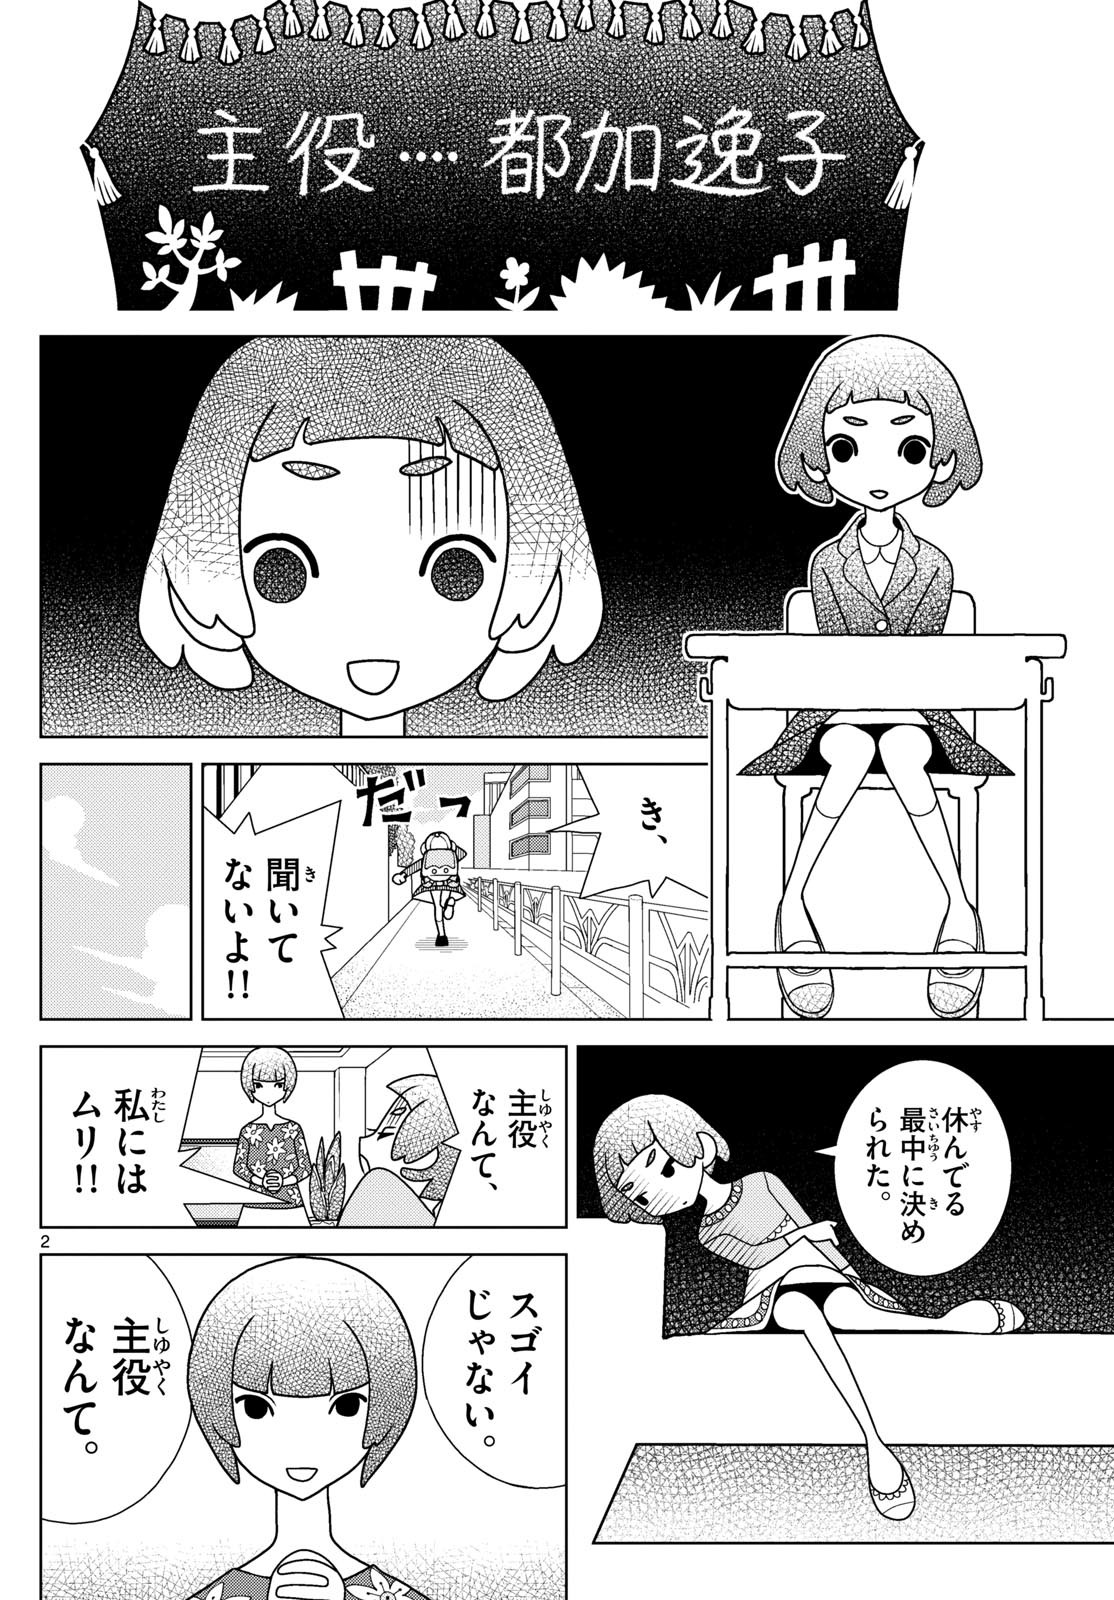 Shibuya Near Family - Chapter 079 - Page 2